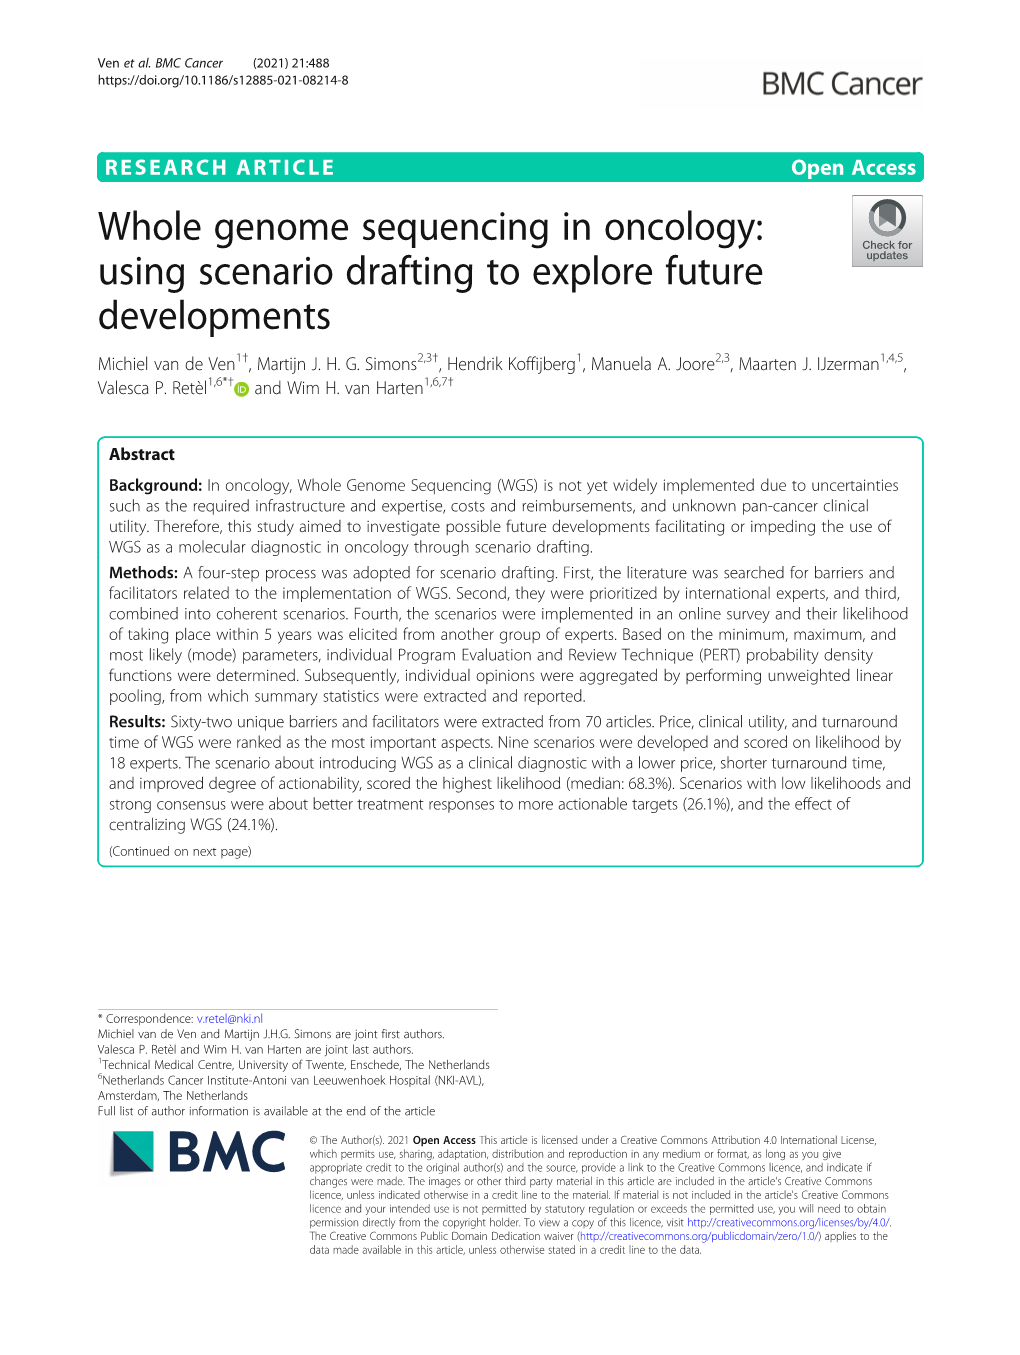 Whole Genome Sequencing in Oncology: Using Scenario Drafting to Explore Future Developments Michiel Van De Ven1†, Martijn J